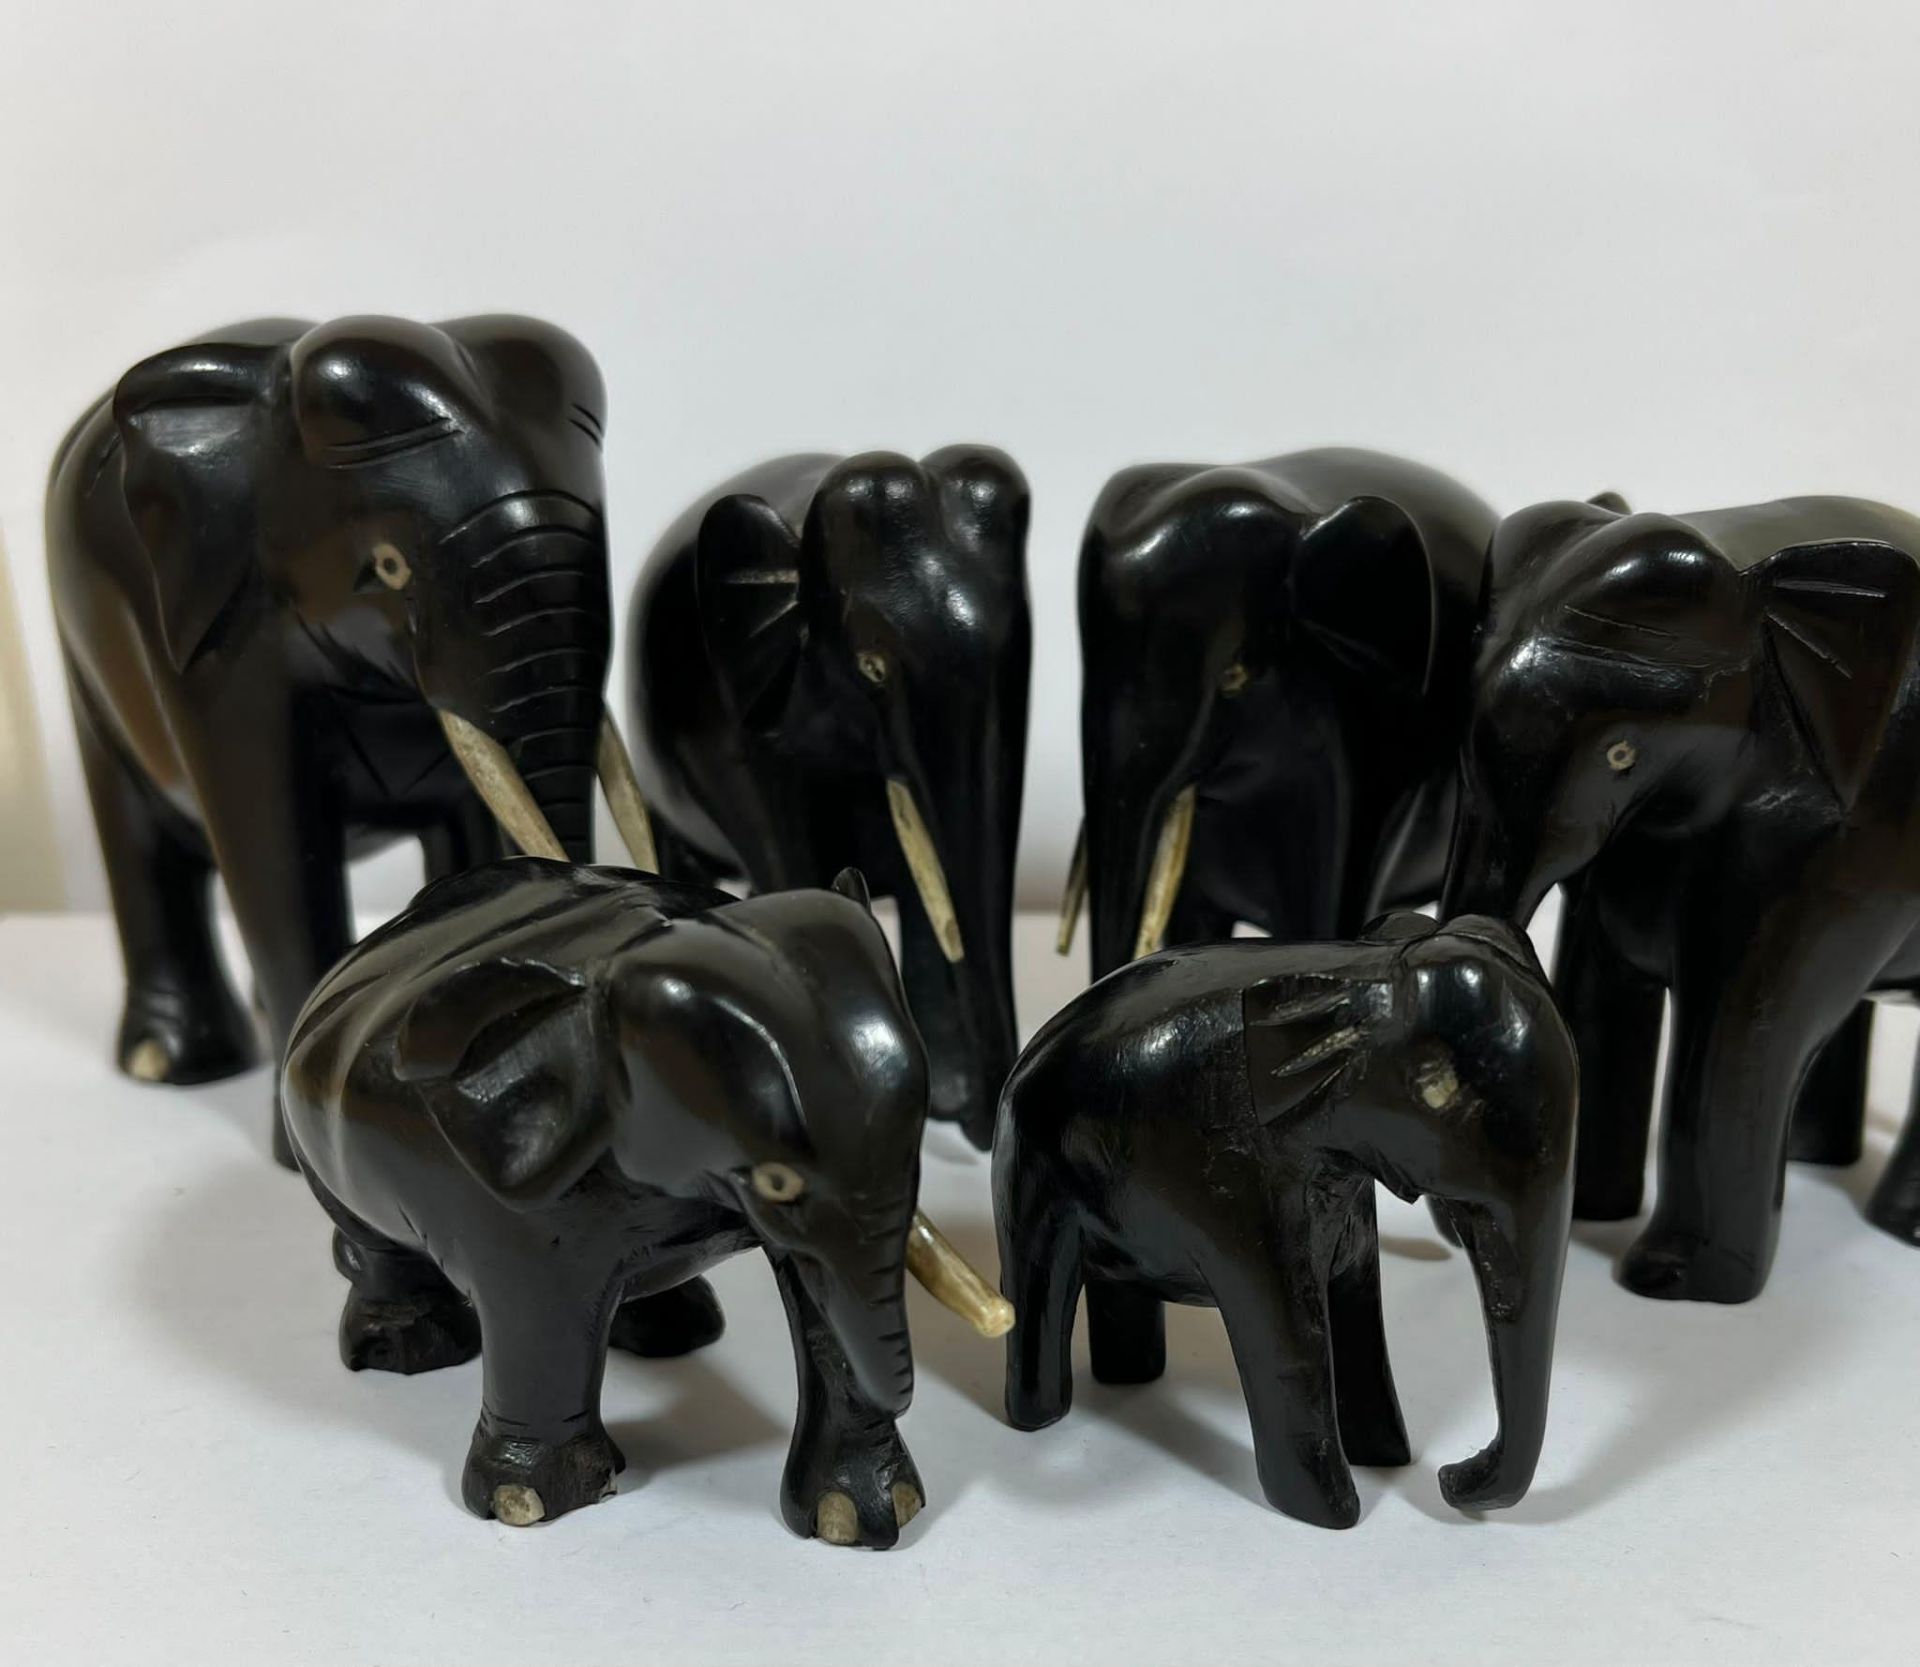 AN ANTIQUE GROUP OF SIX EBONY ELEPHANTS, LARGEST 9CM HEIGHT - Image 2 of 2